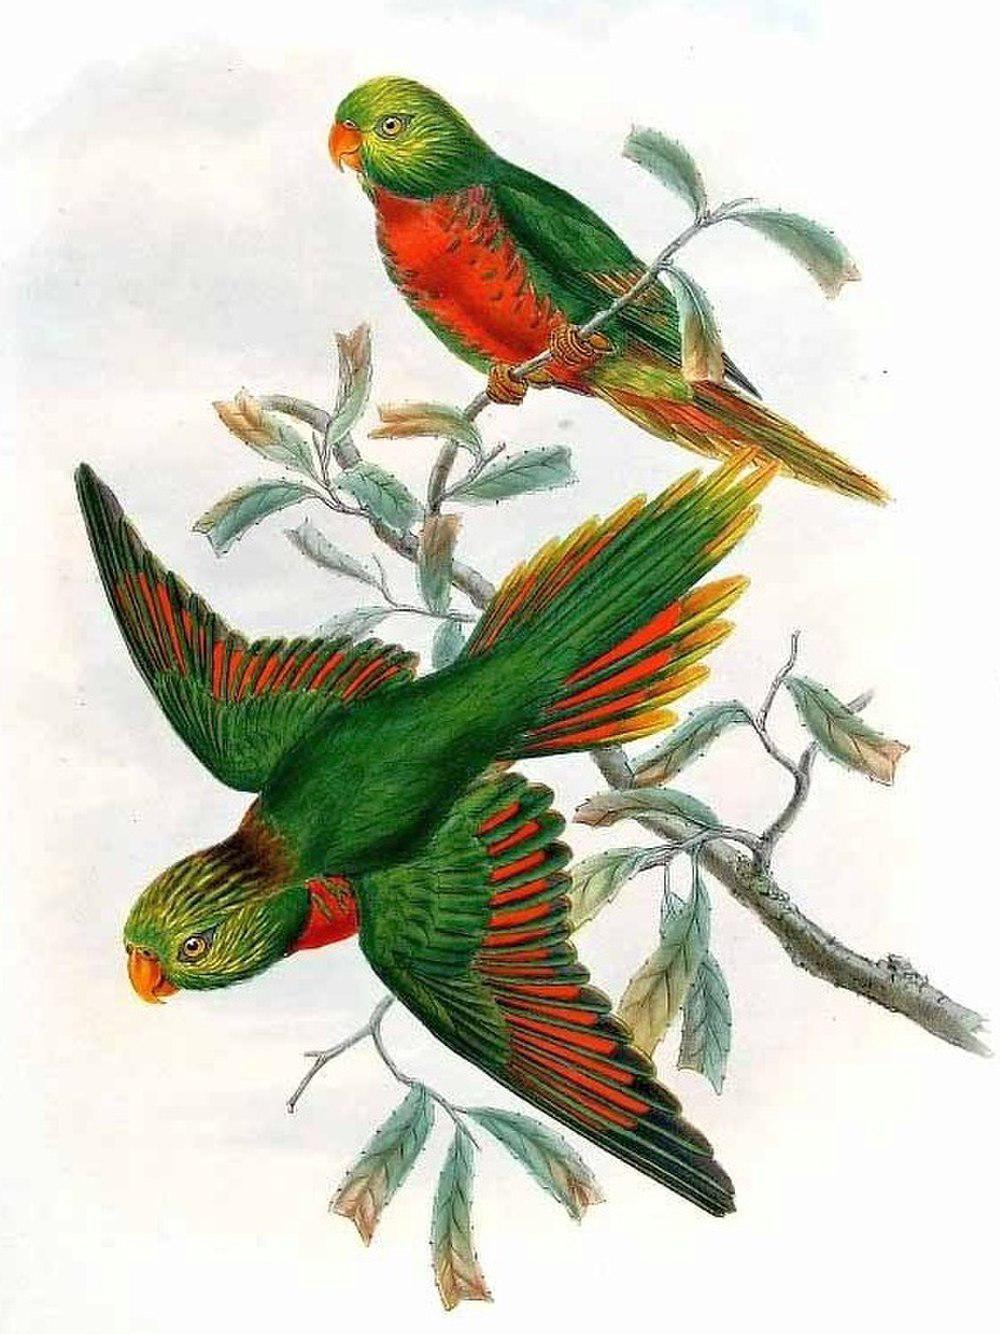 翠绿鹦鹉 / Orange-billed Lorikeet / Neopsittacus pullicauda